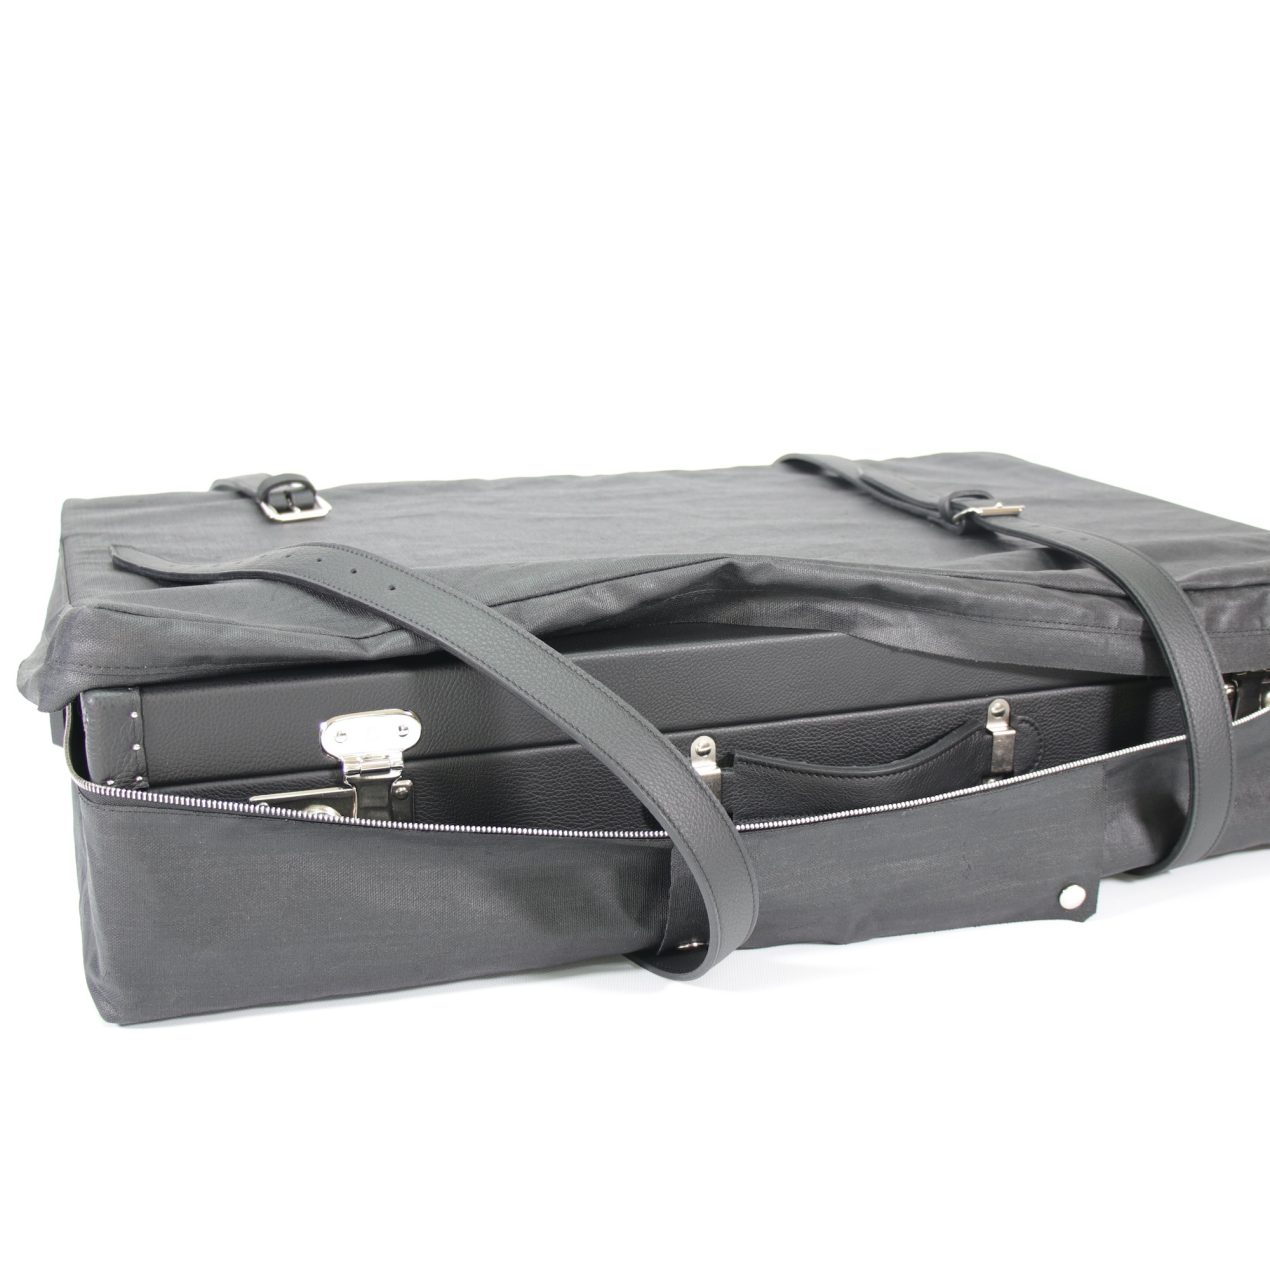 Luggage rack suitcase for Morgan PLUS FOUR, PLUS SIX